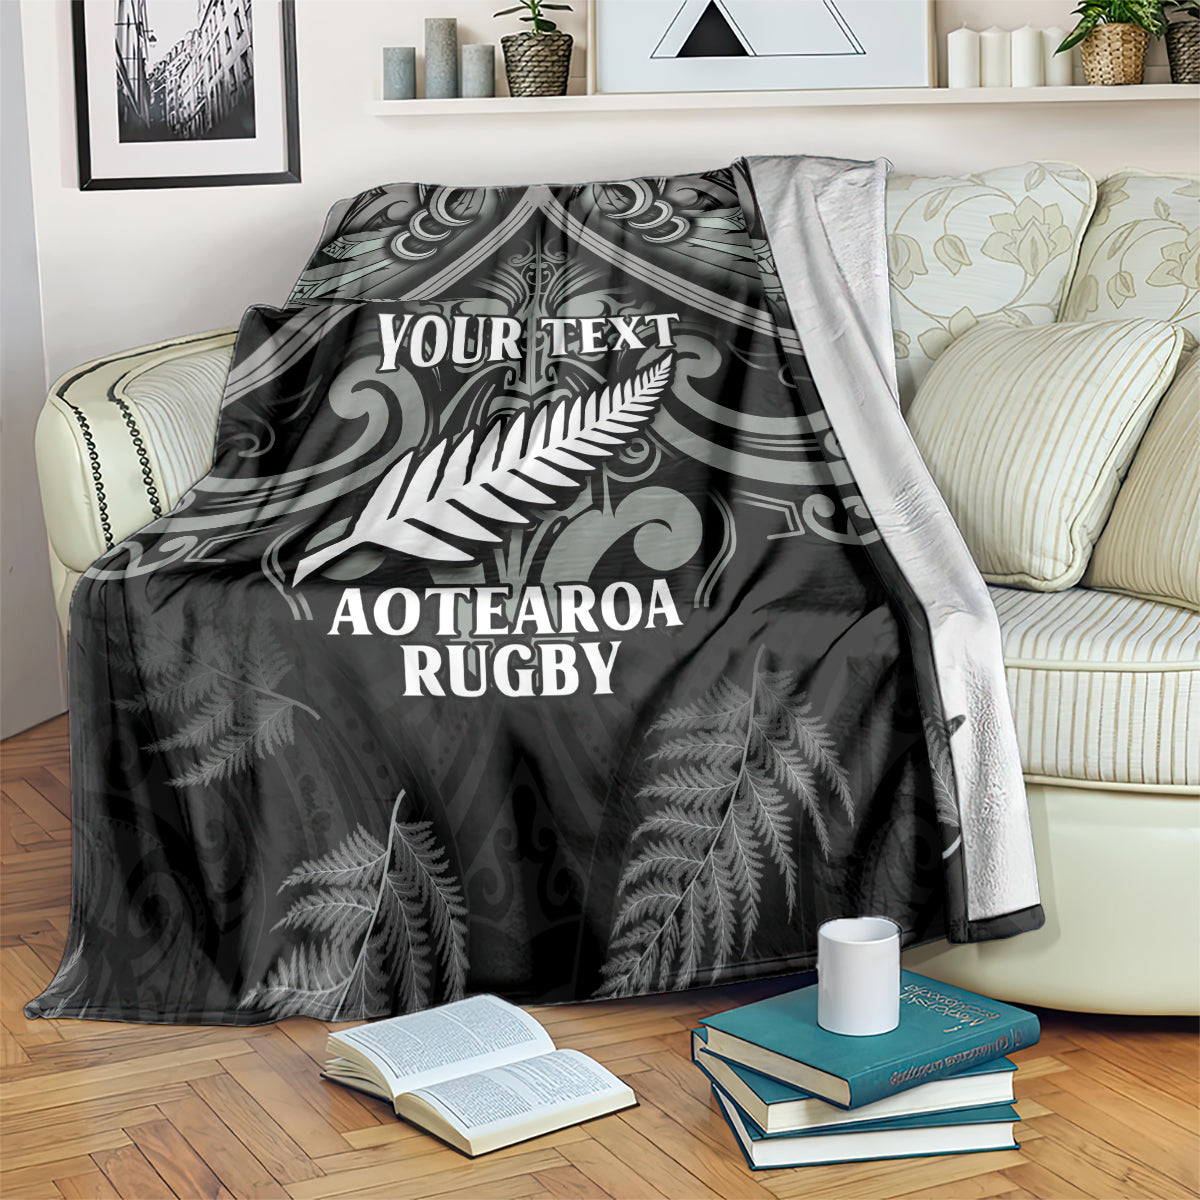 Custom New Zealand Silver Fern Rugby Blanket All Black Since 1892 Aotearoa Moko Maori